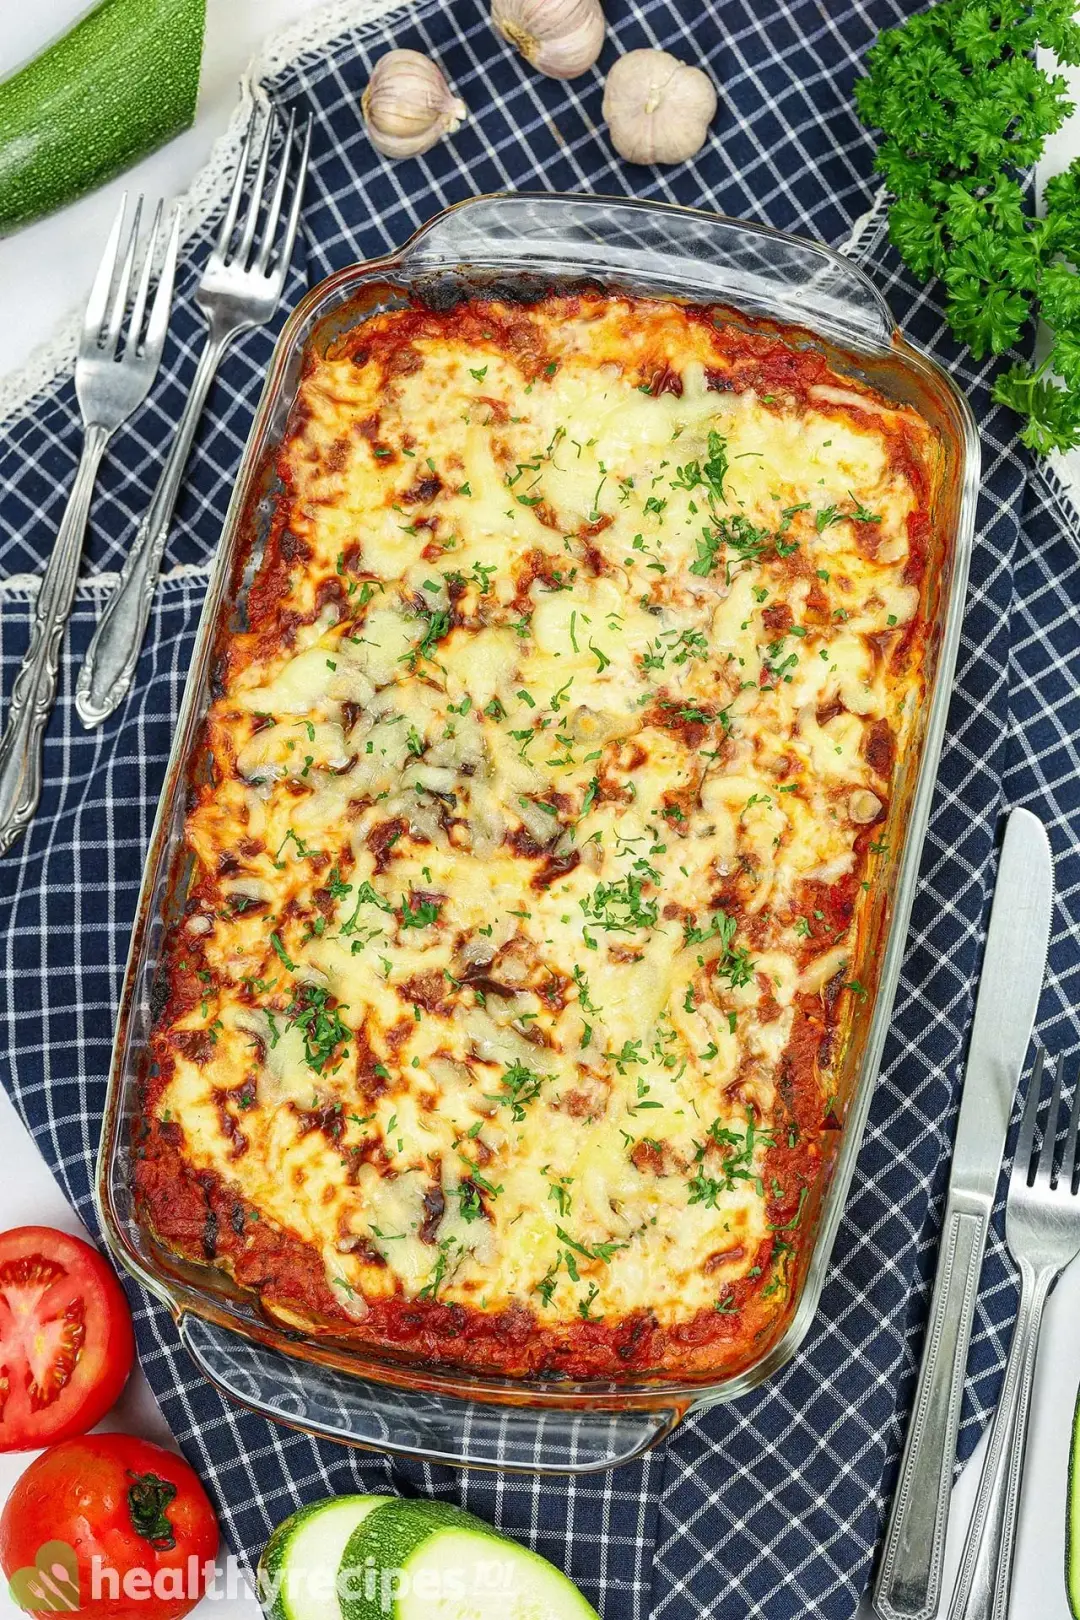 Is Zucchini Lasagna Healthy